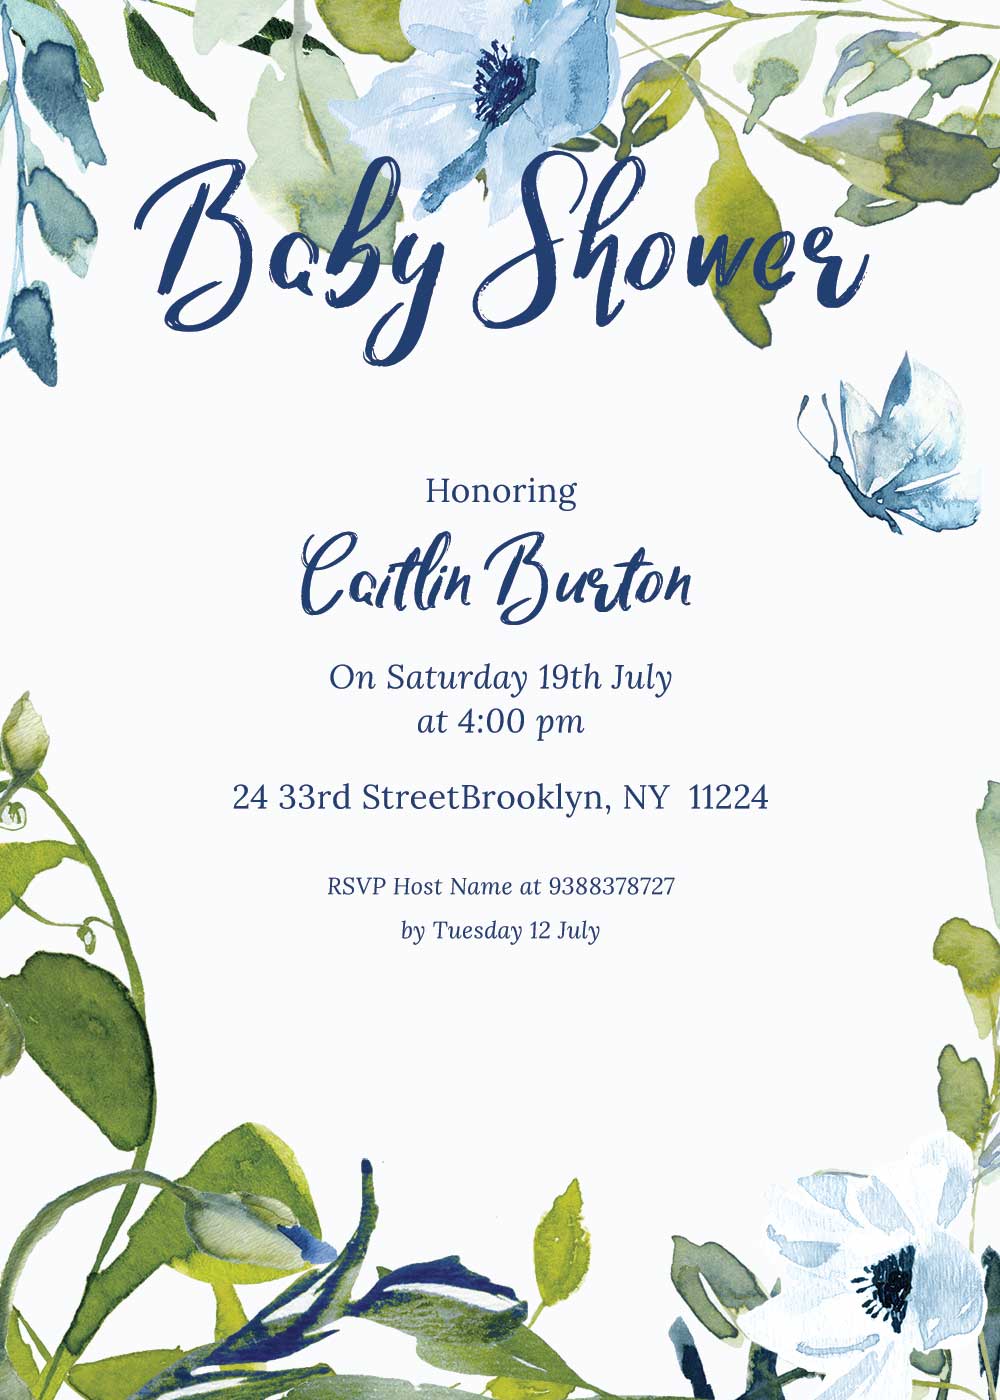 Baby shower invitations - Sky Theme